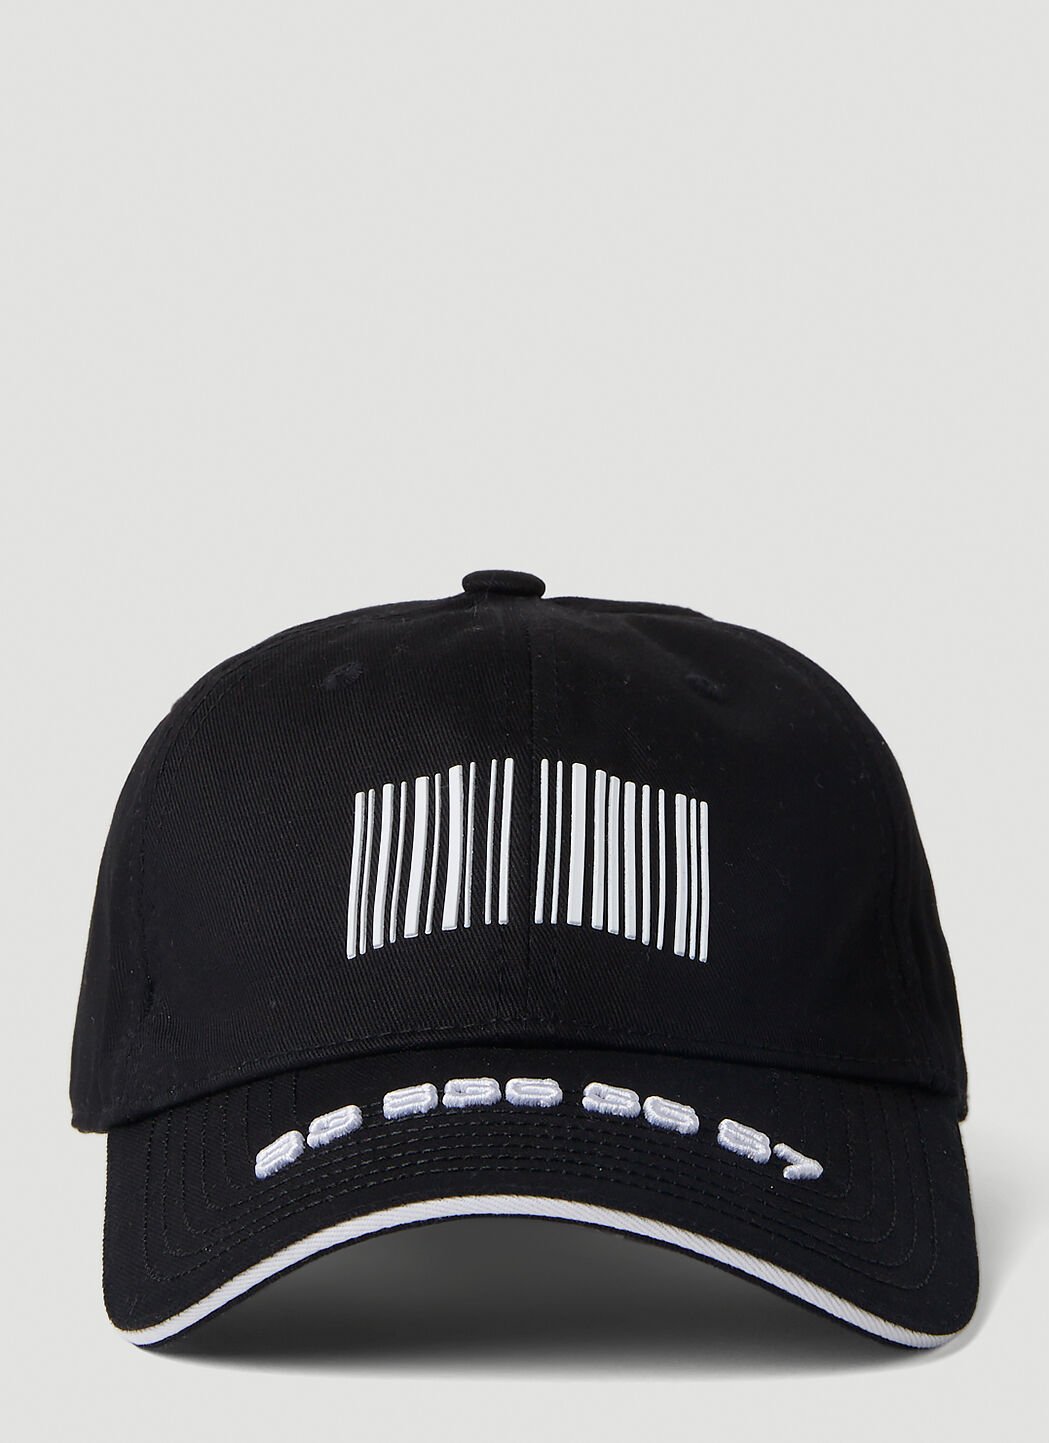 VTMNTS Barcode 棒球帽 黑色 vtm0354008